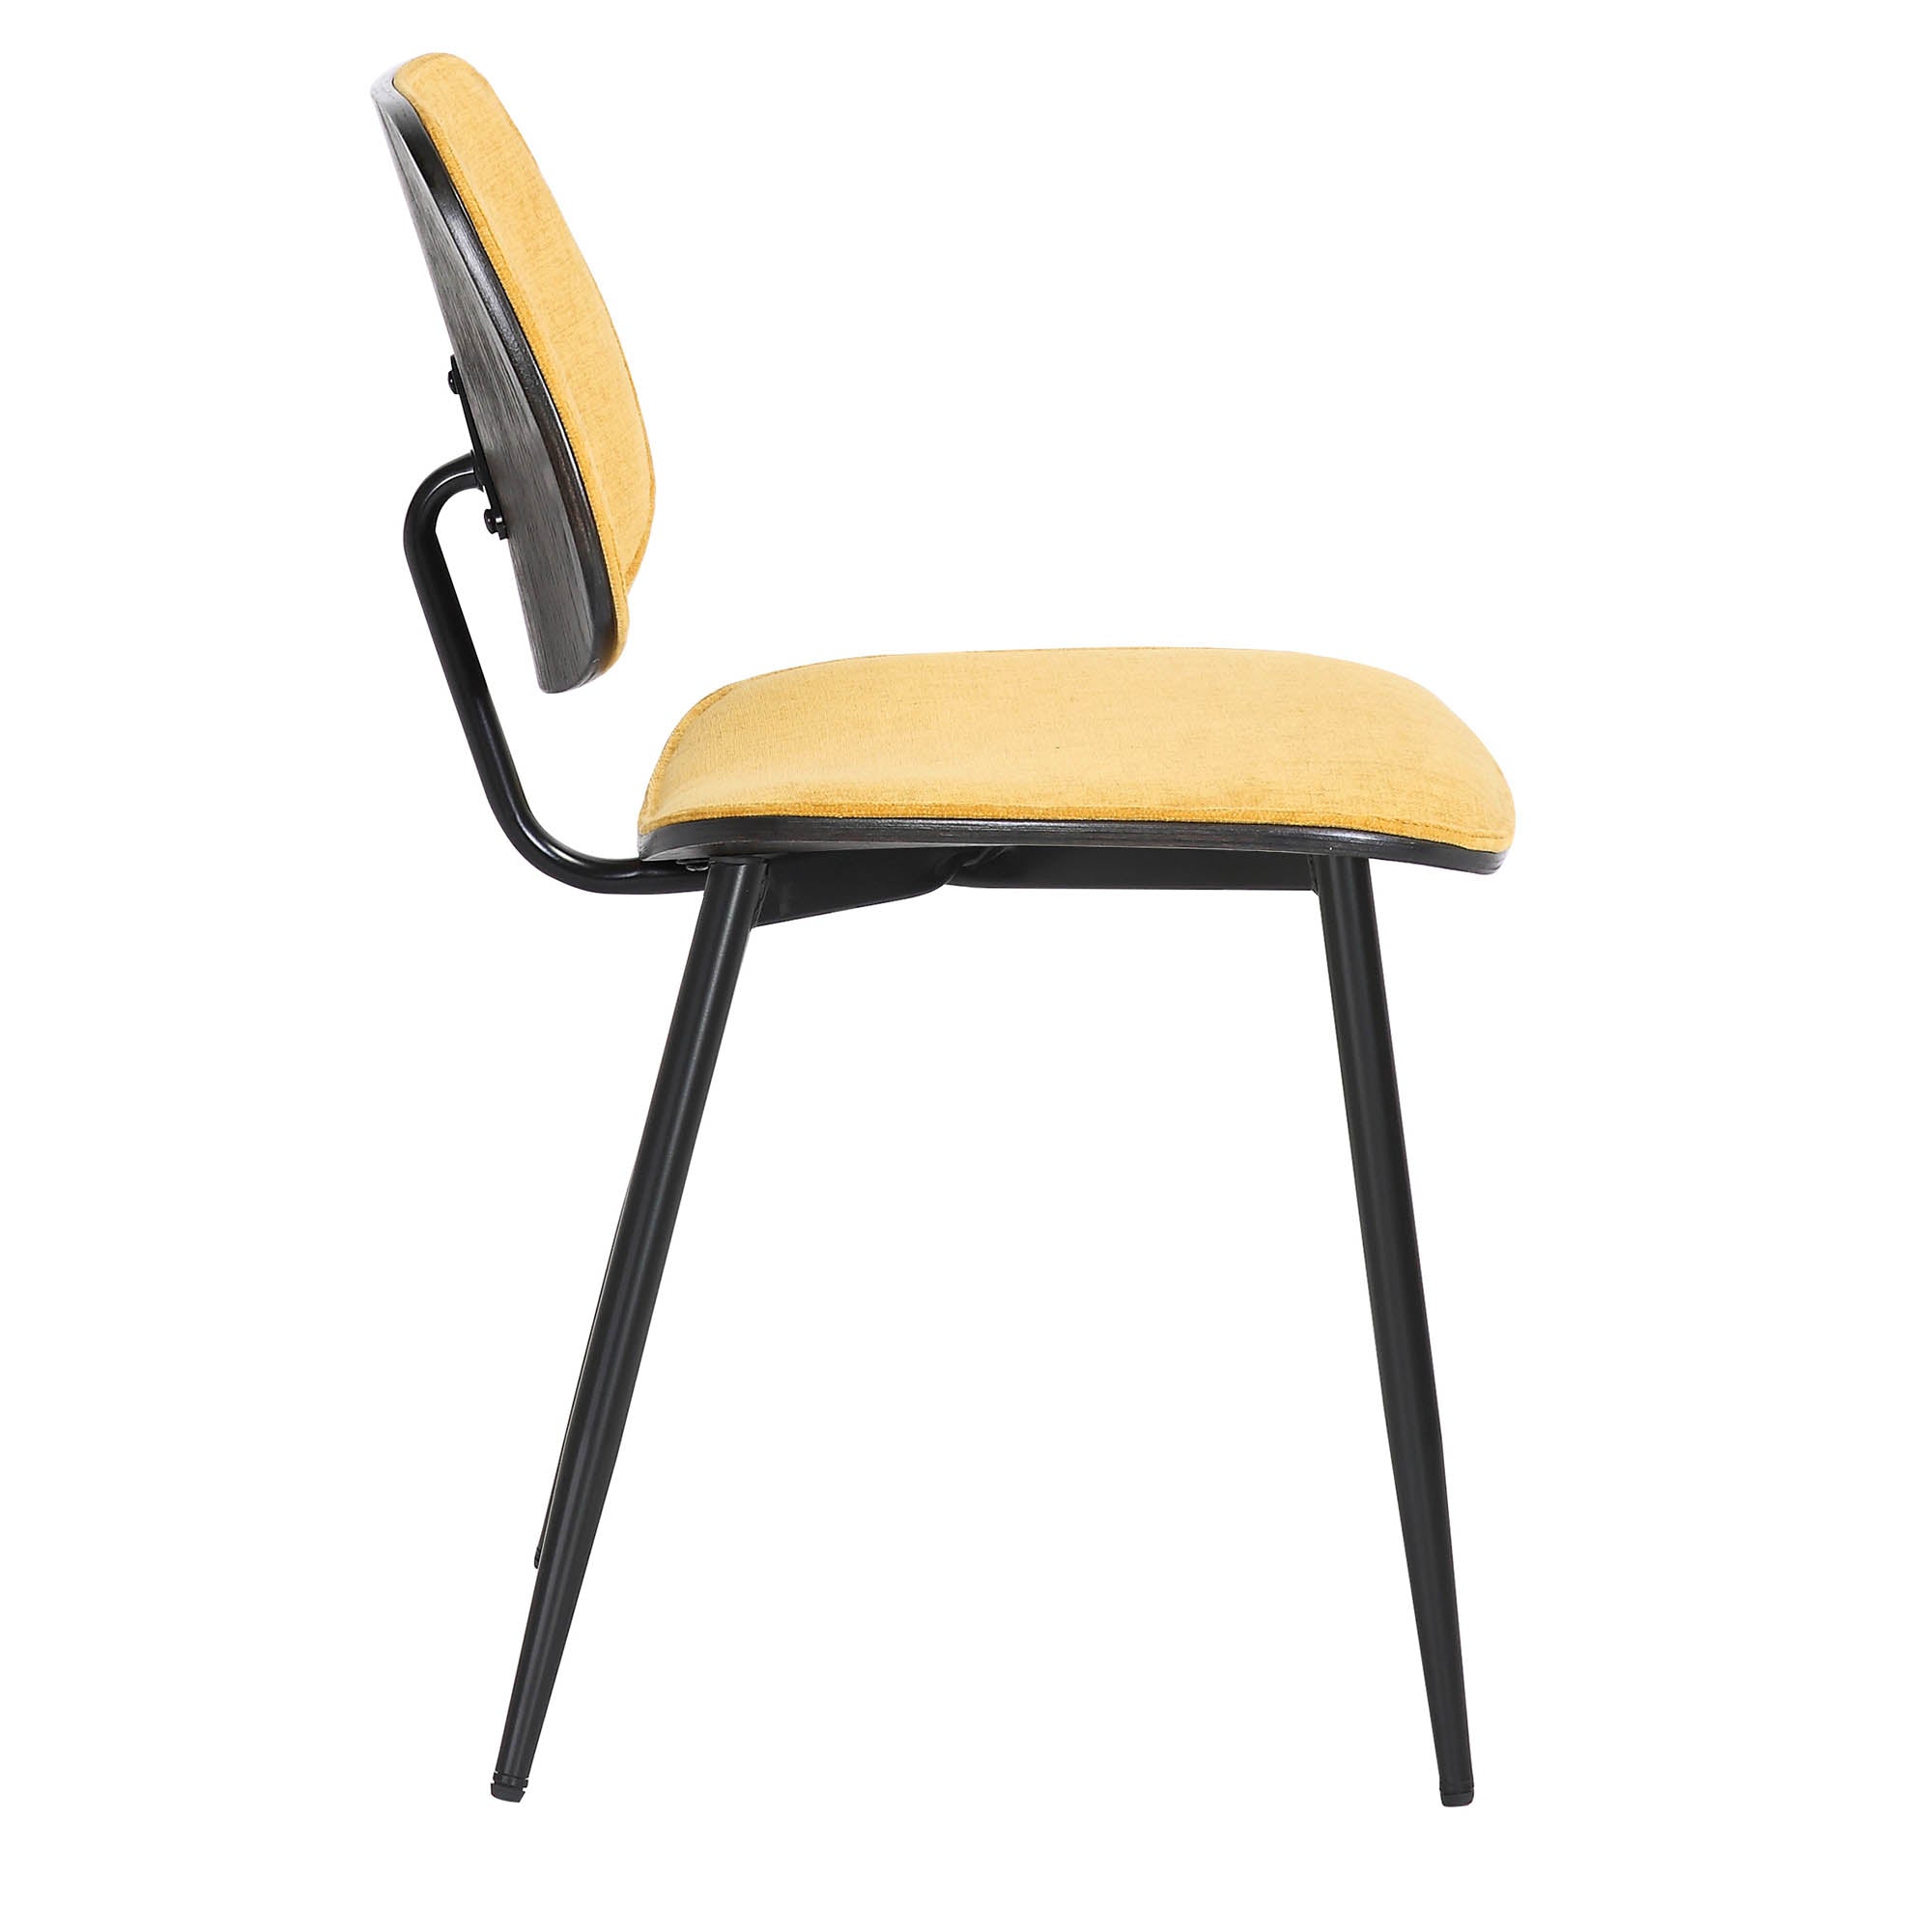 Capri Side Chair, Set of 2, in Mustard, Walnut and Black 202-591MUS